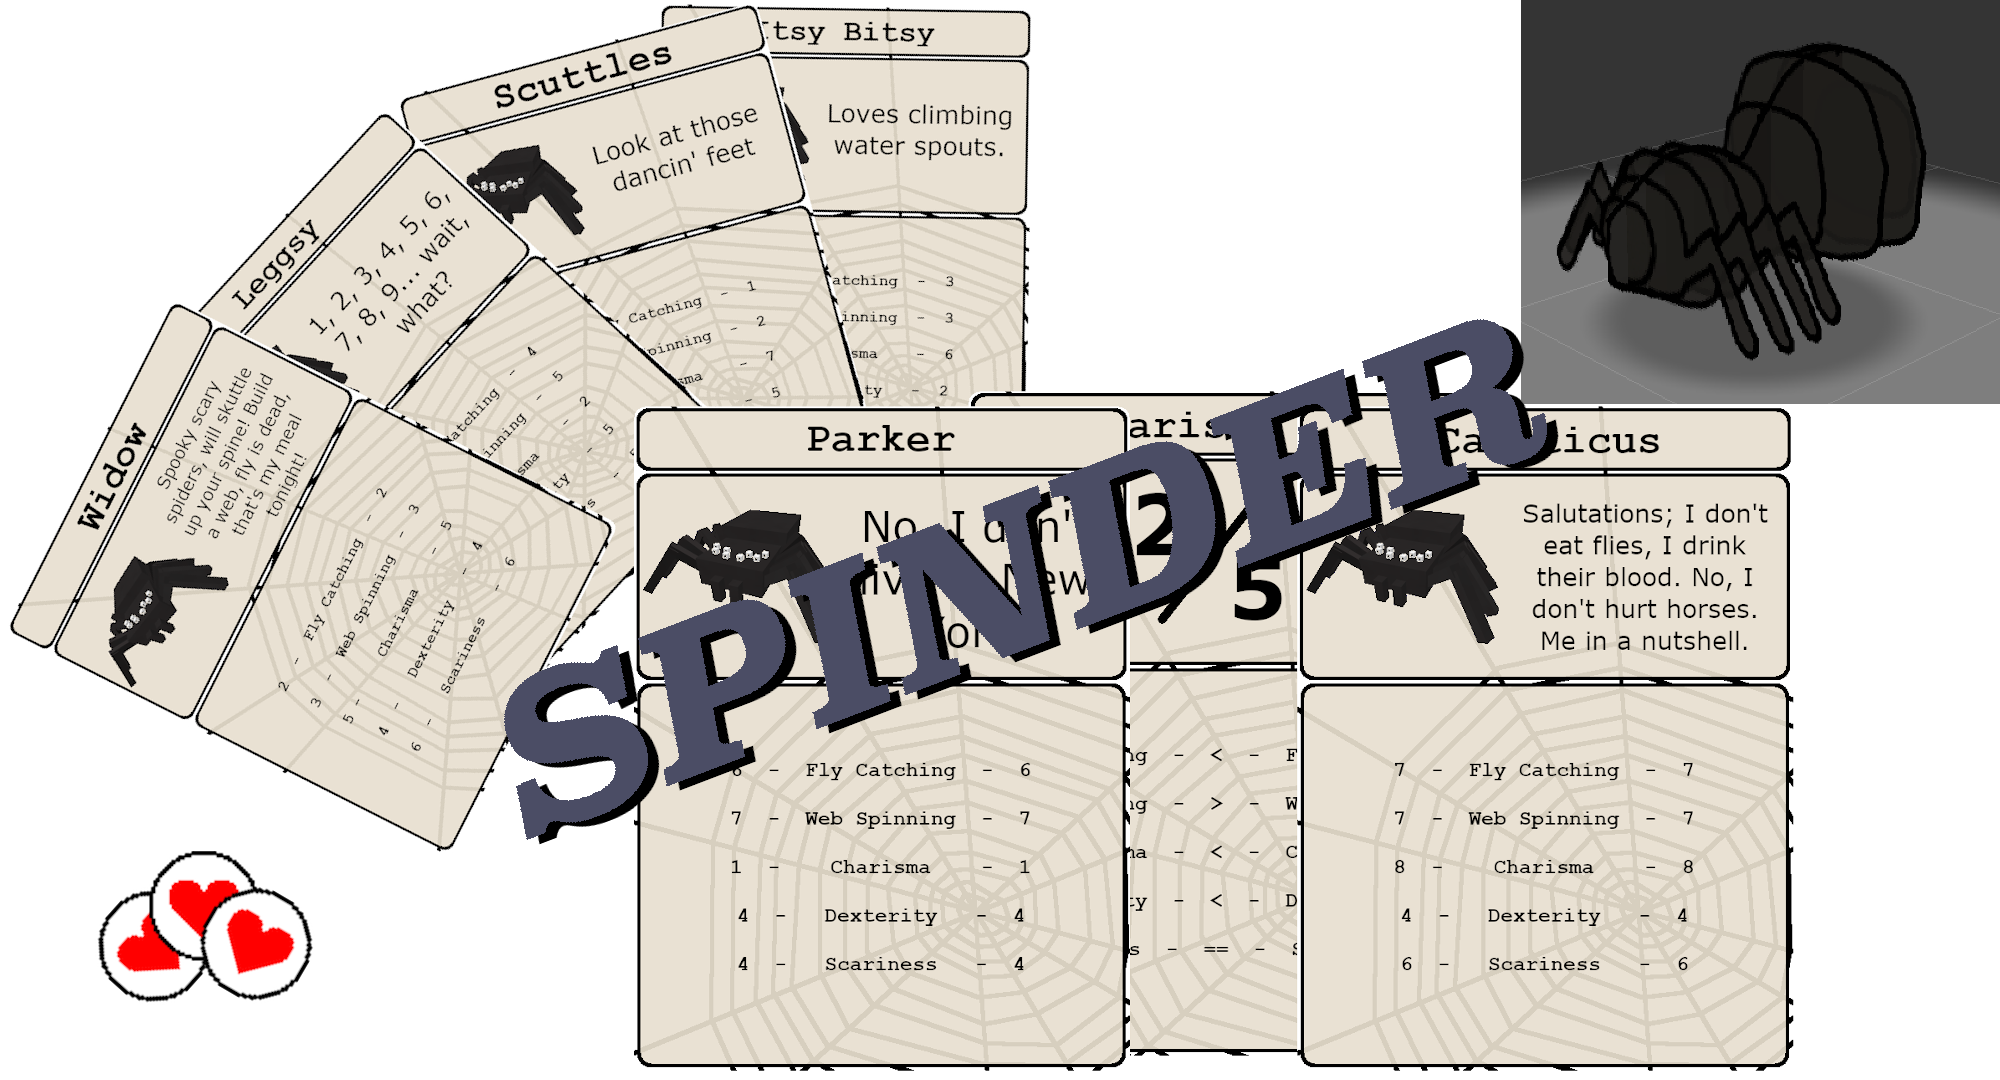 Spinder: The spider dating game!